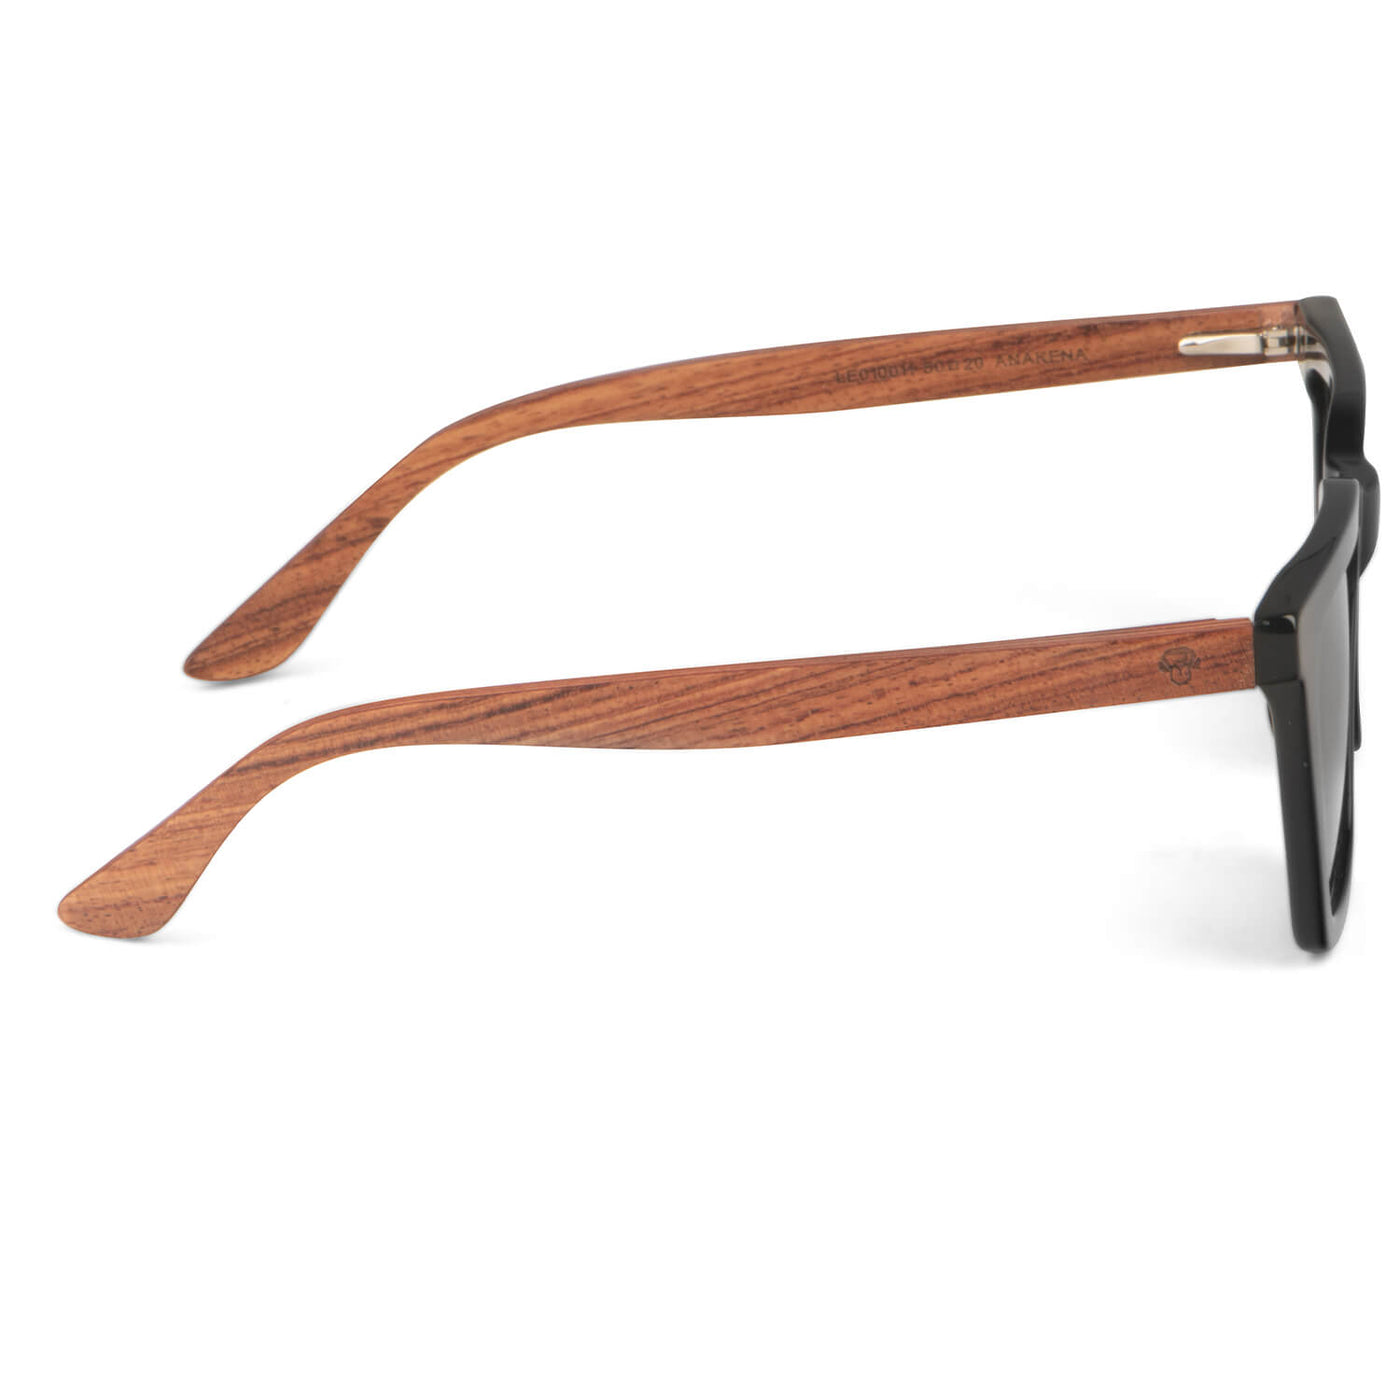 anteojos lentes de sol polarizados de color negro forma clásica para hombre y mujer de cara redonda con o sin receta optica grandes tamaño XL